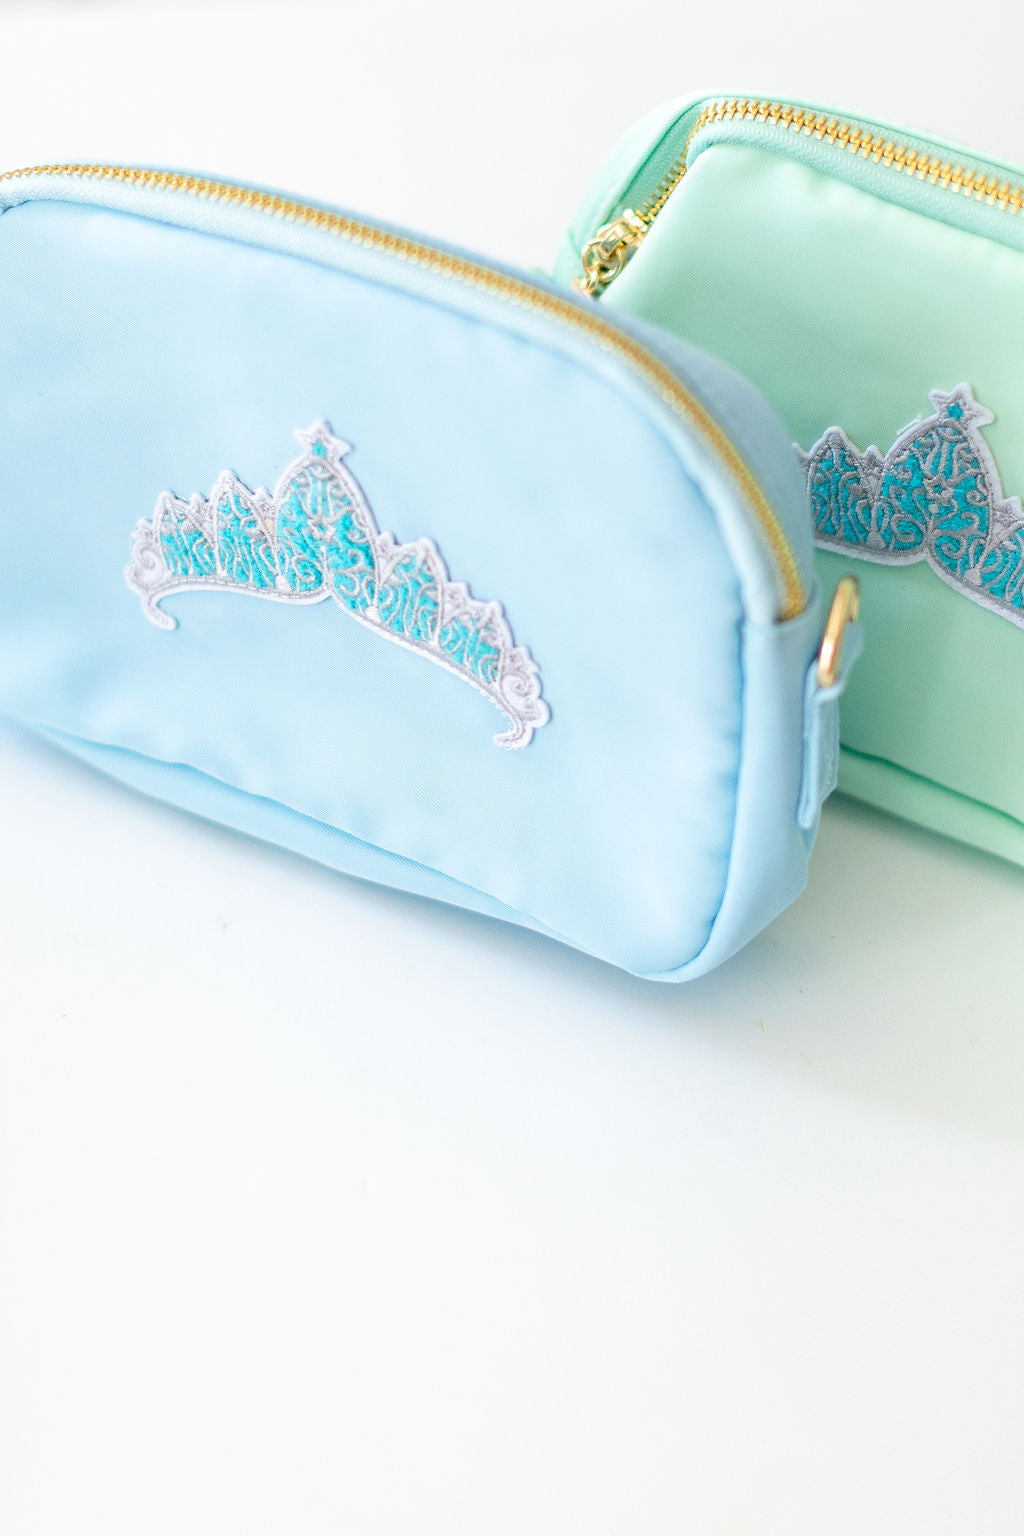 Disney Princess Women's Graphic Mini Backpack, Multi-Color - Walmart.com